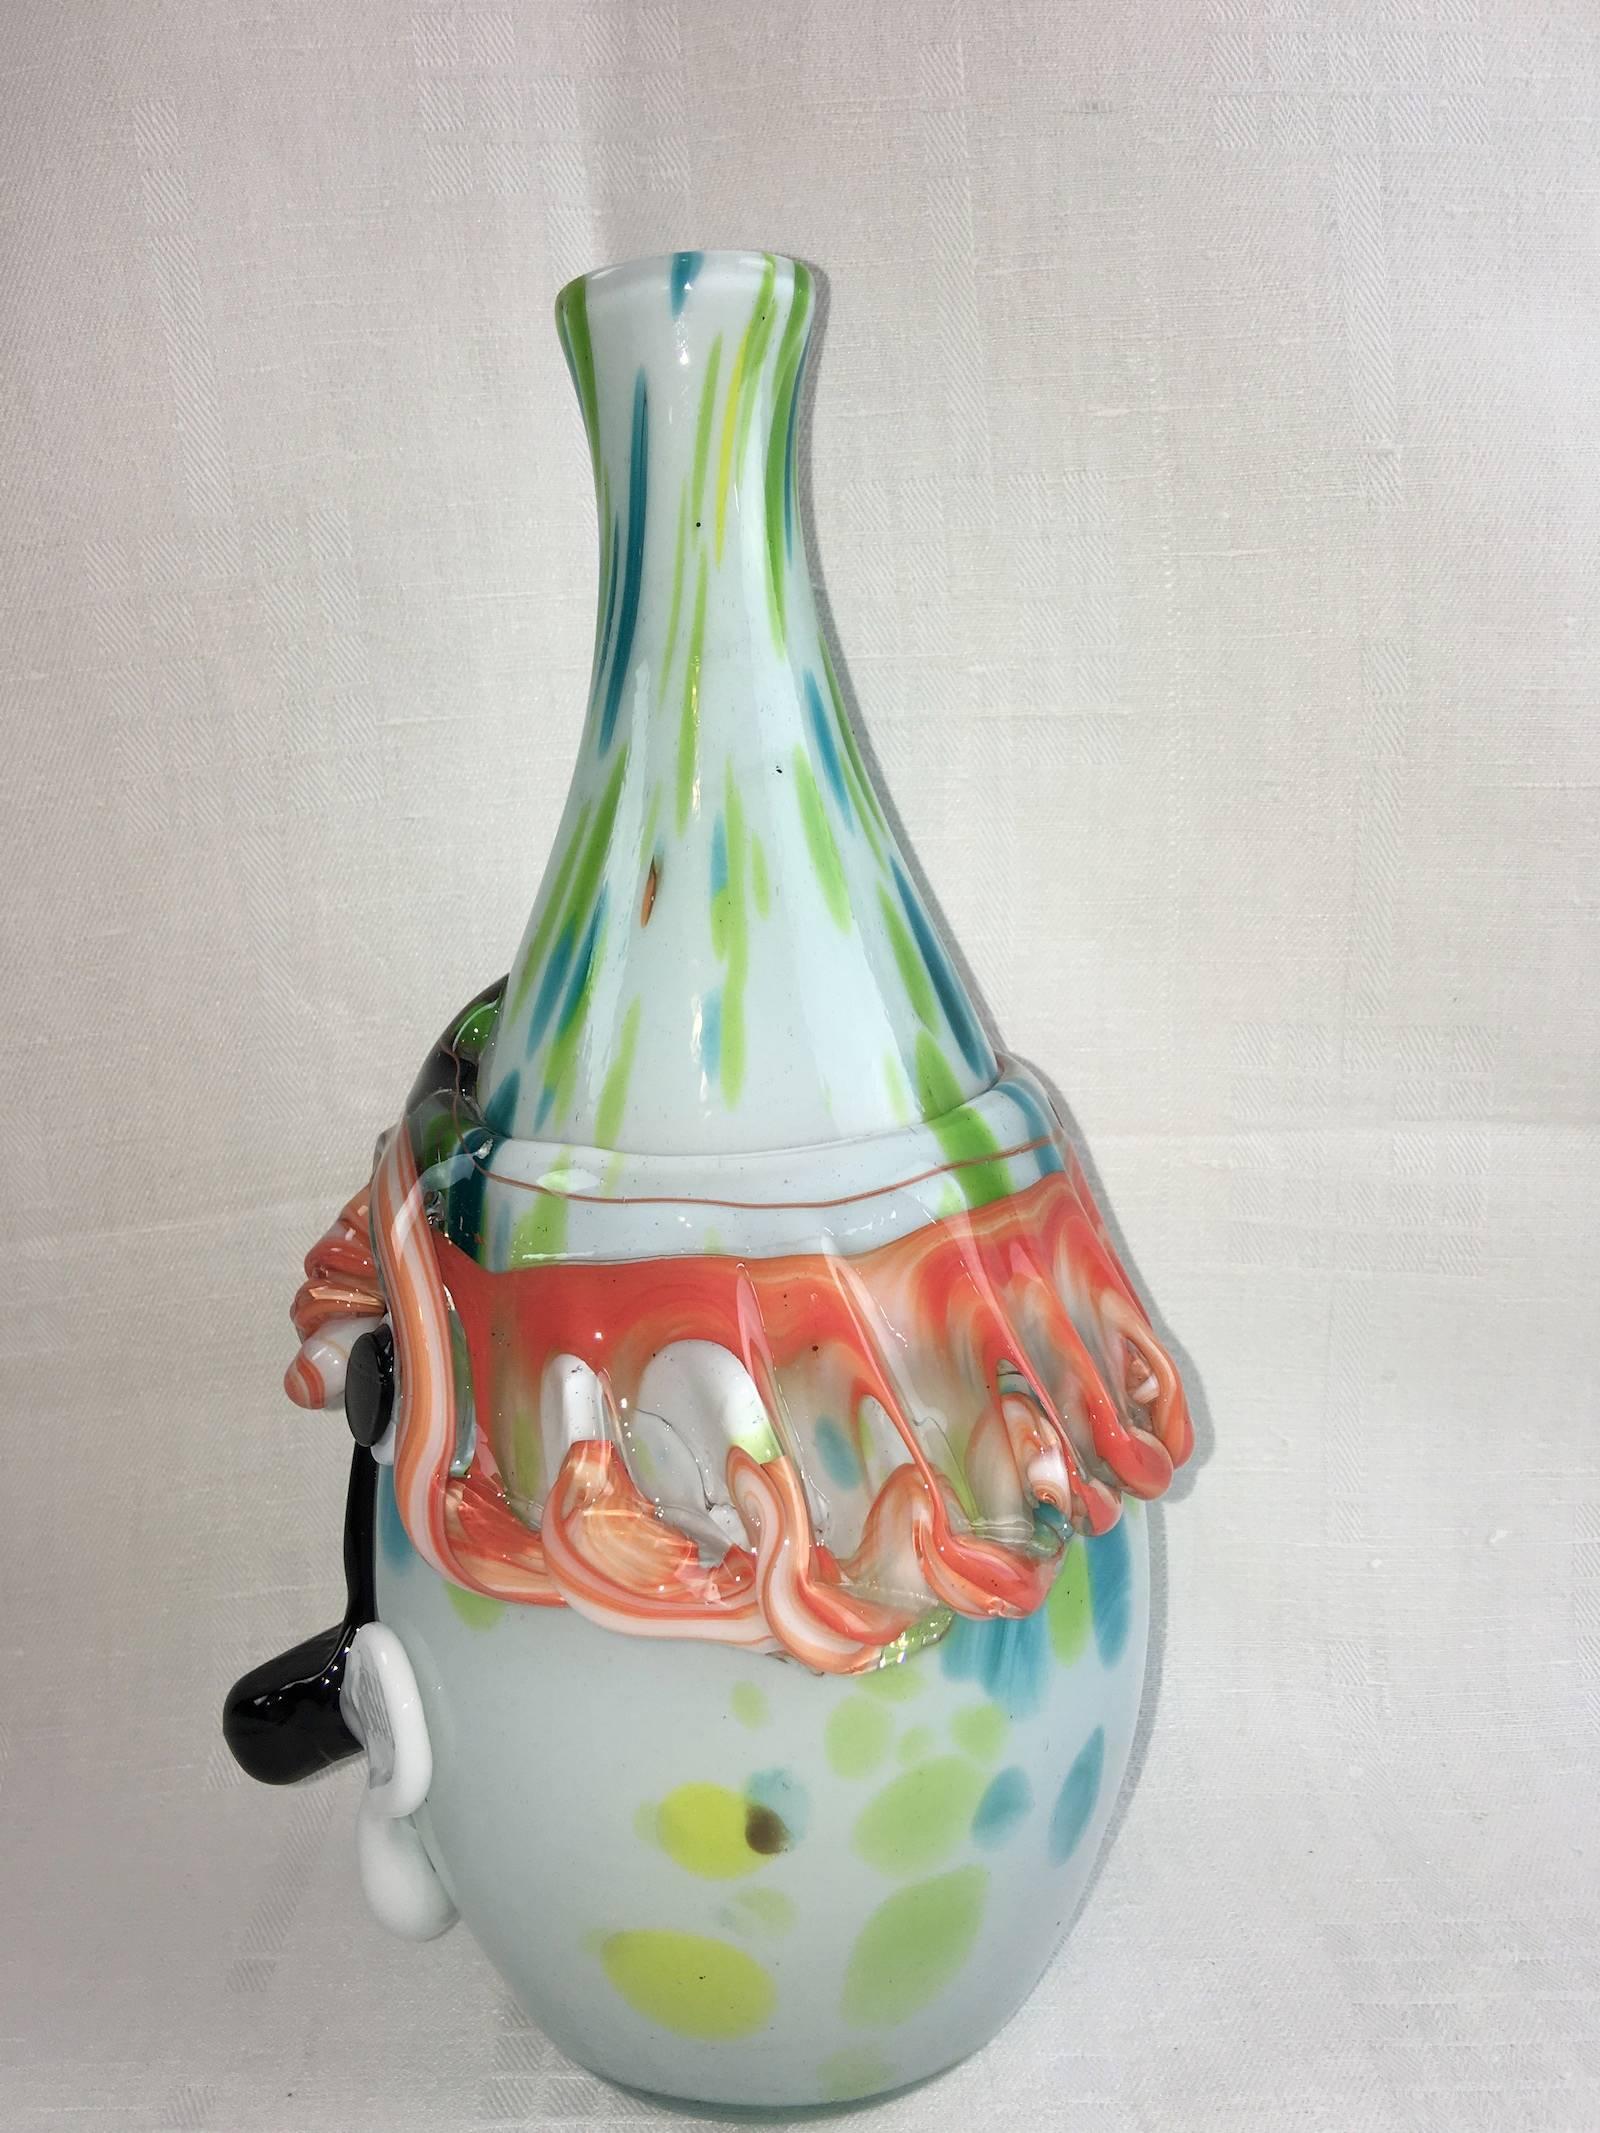 picasso style vase